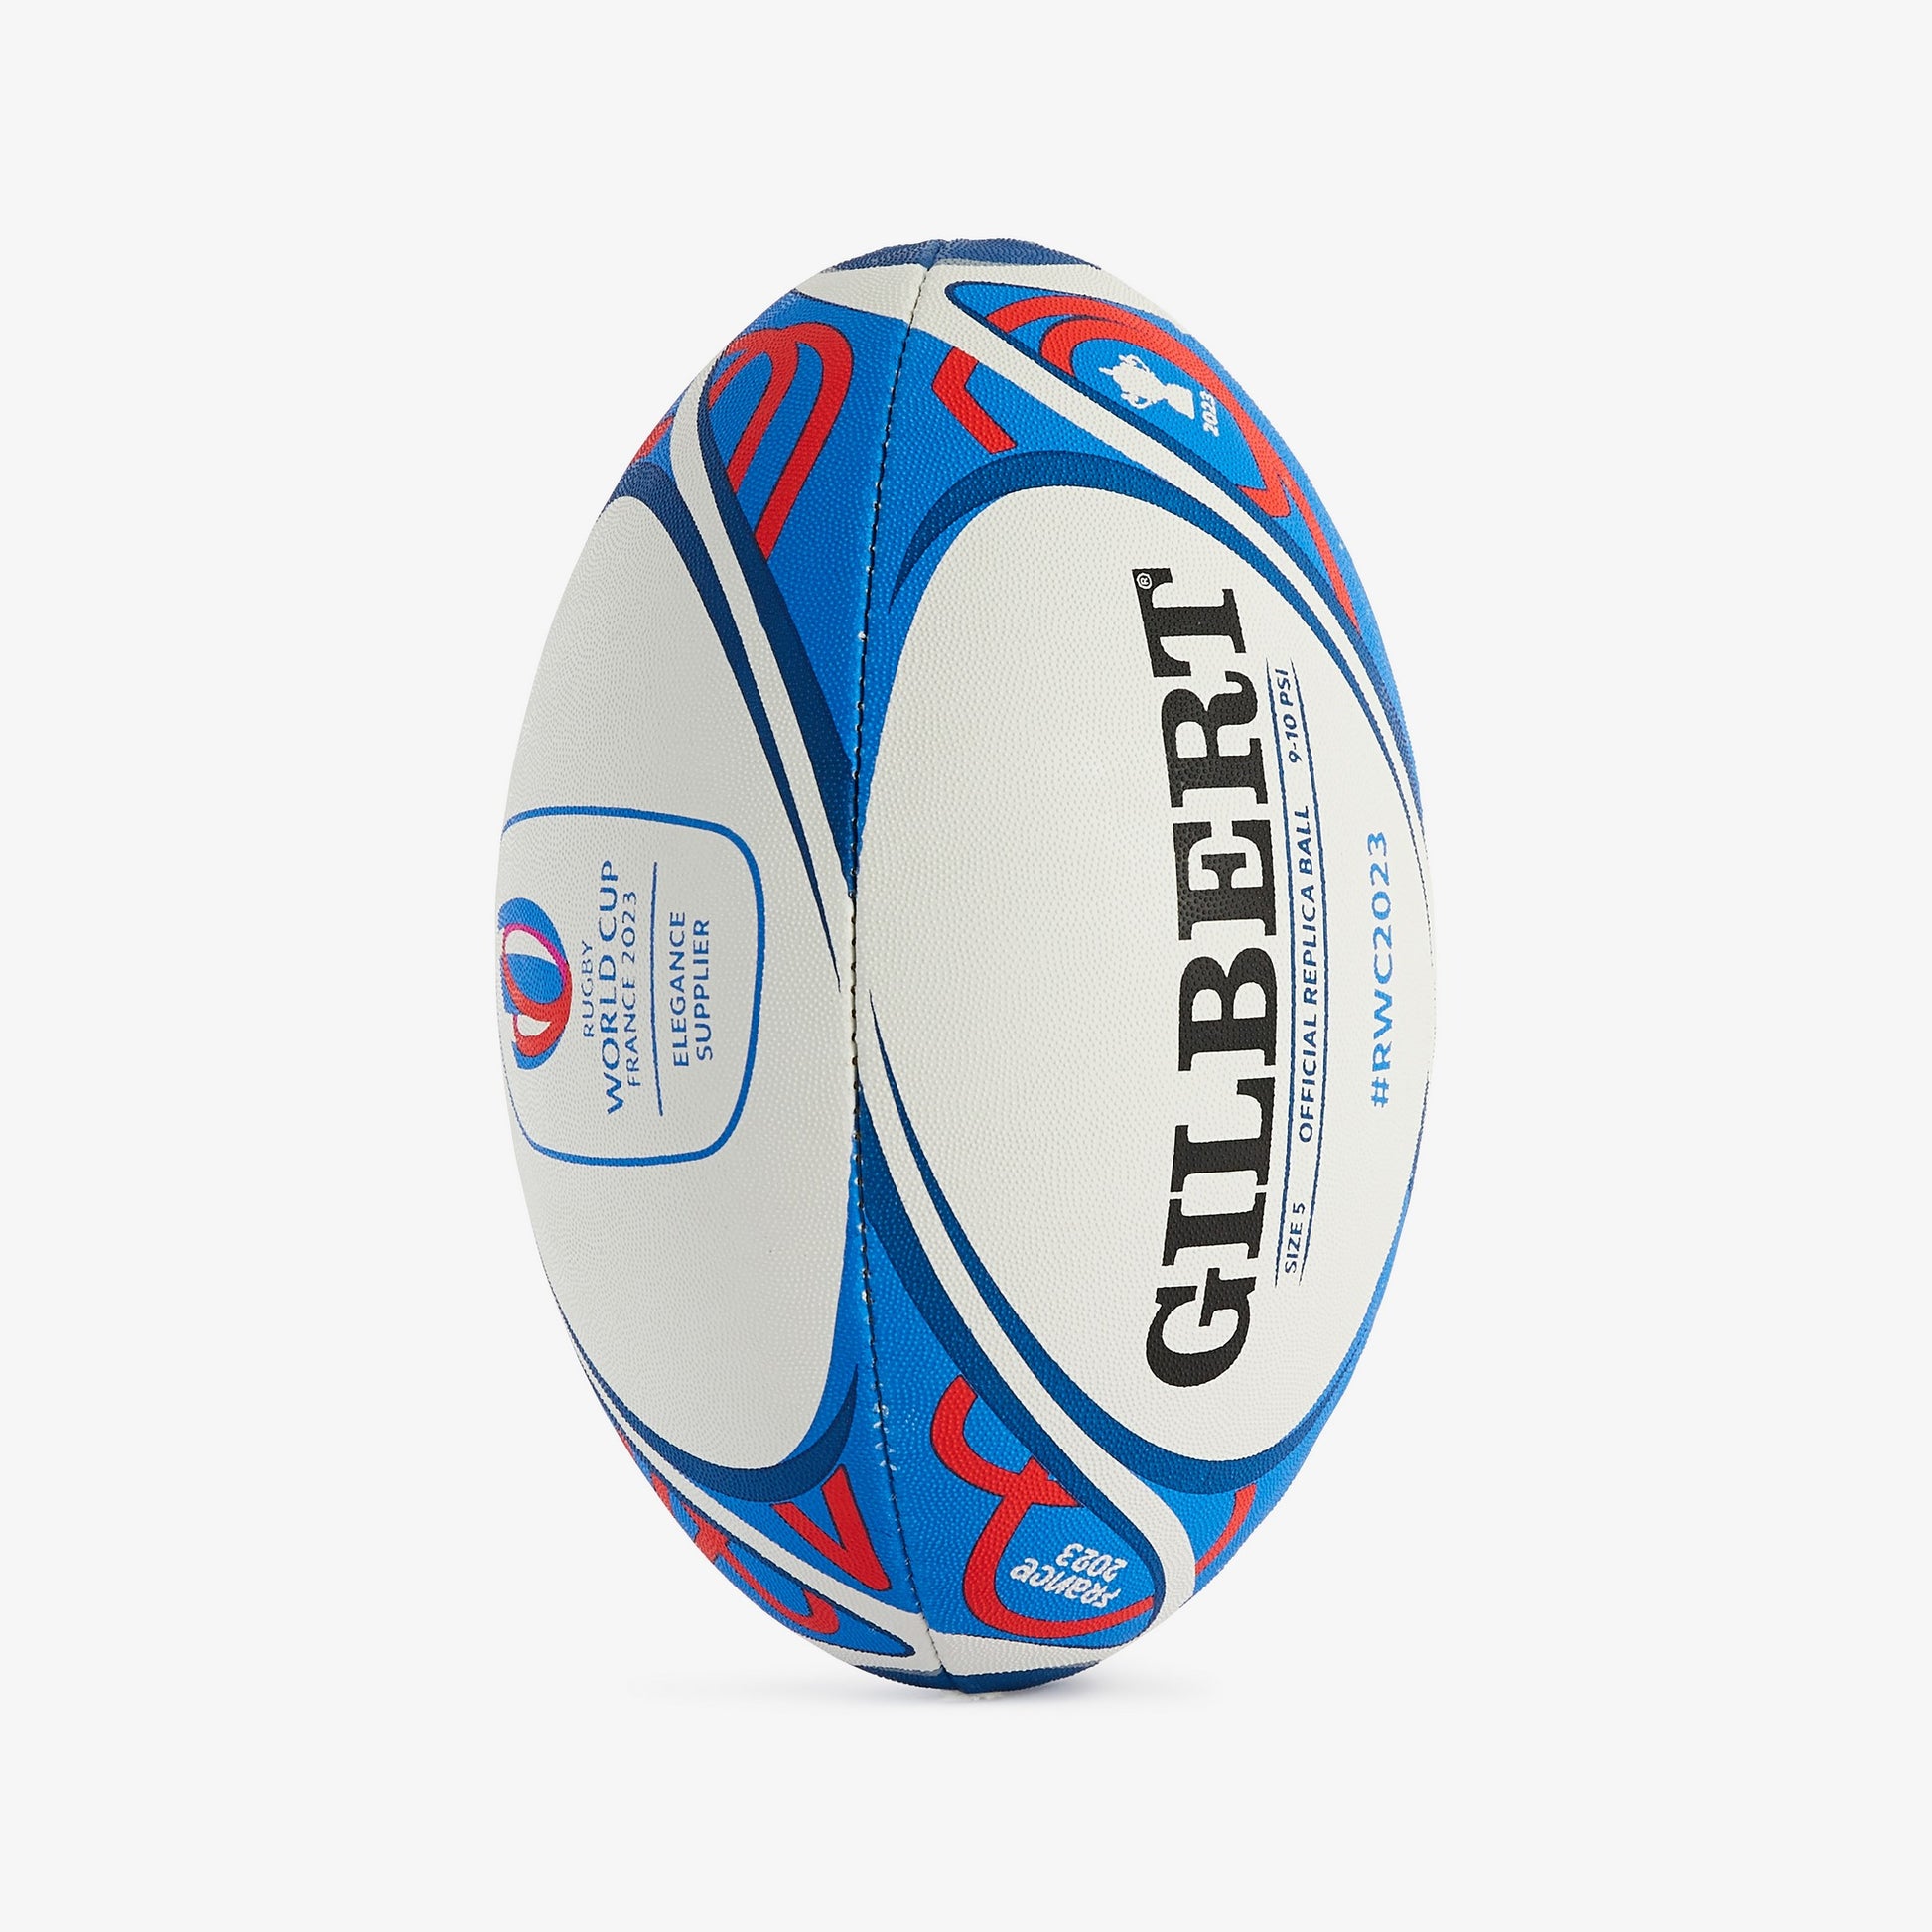 Choisir son ballon de rugby